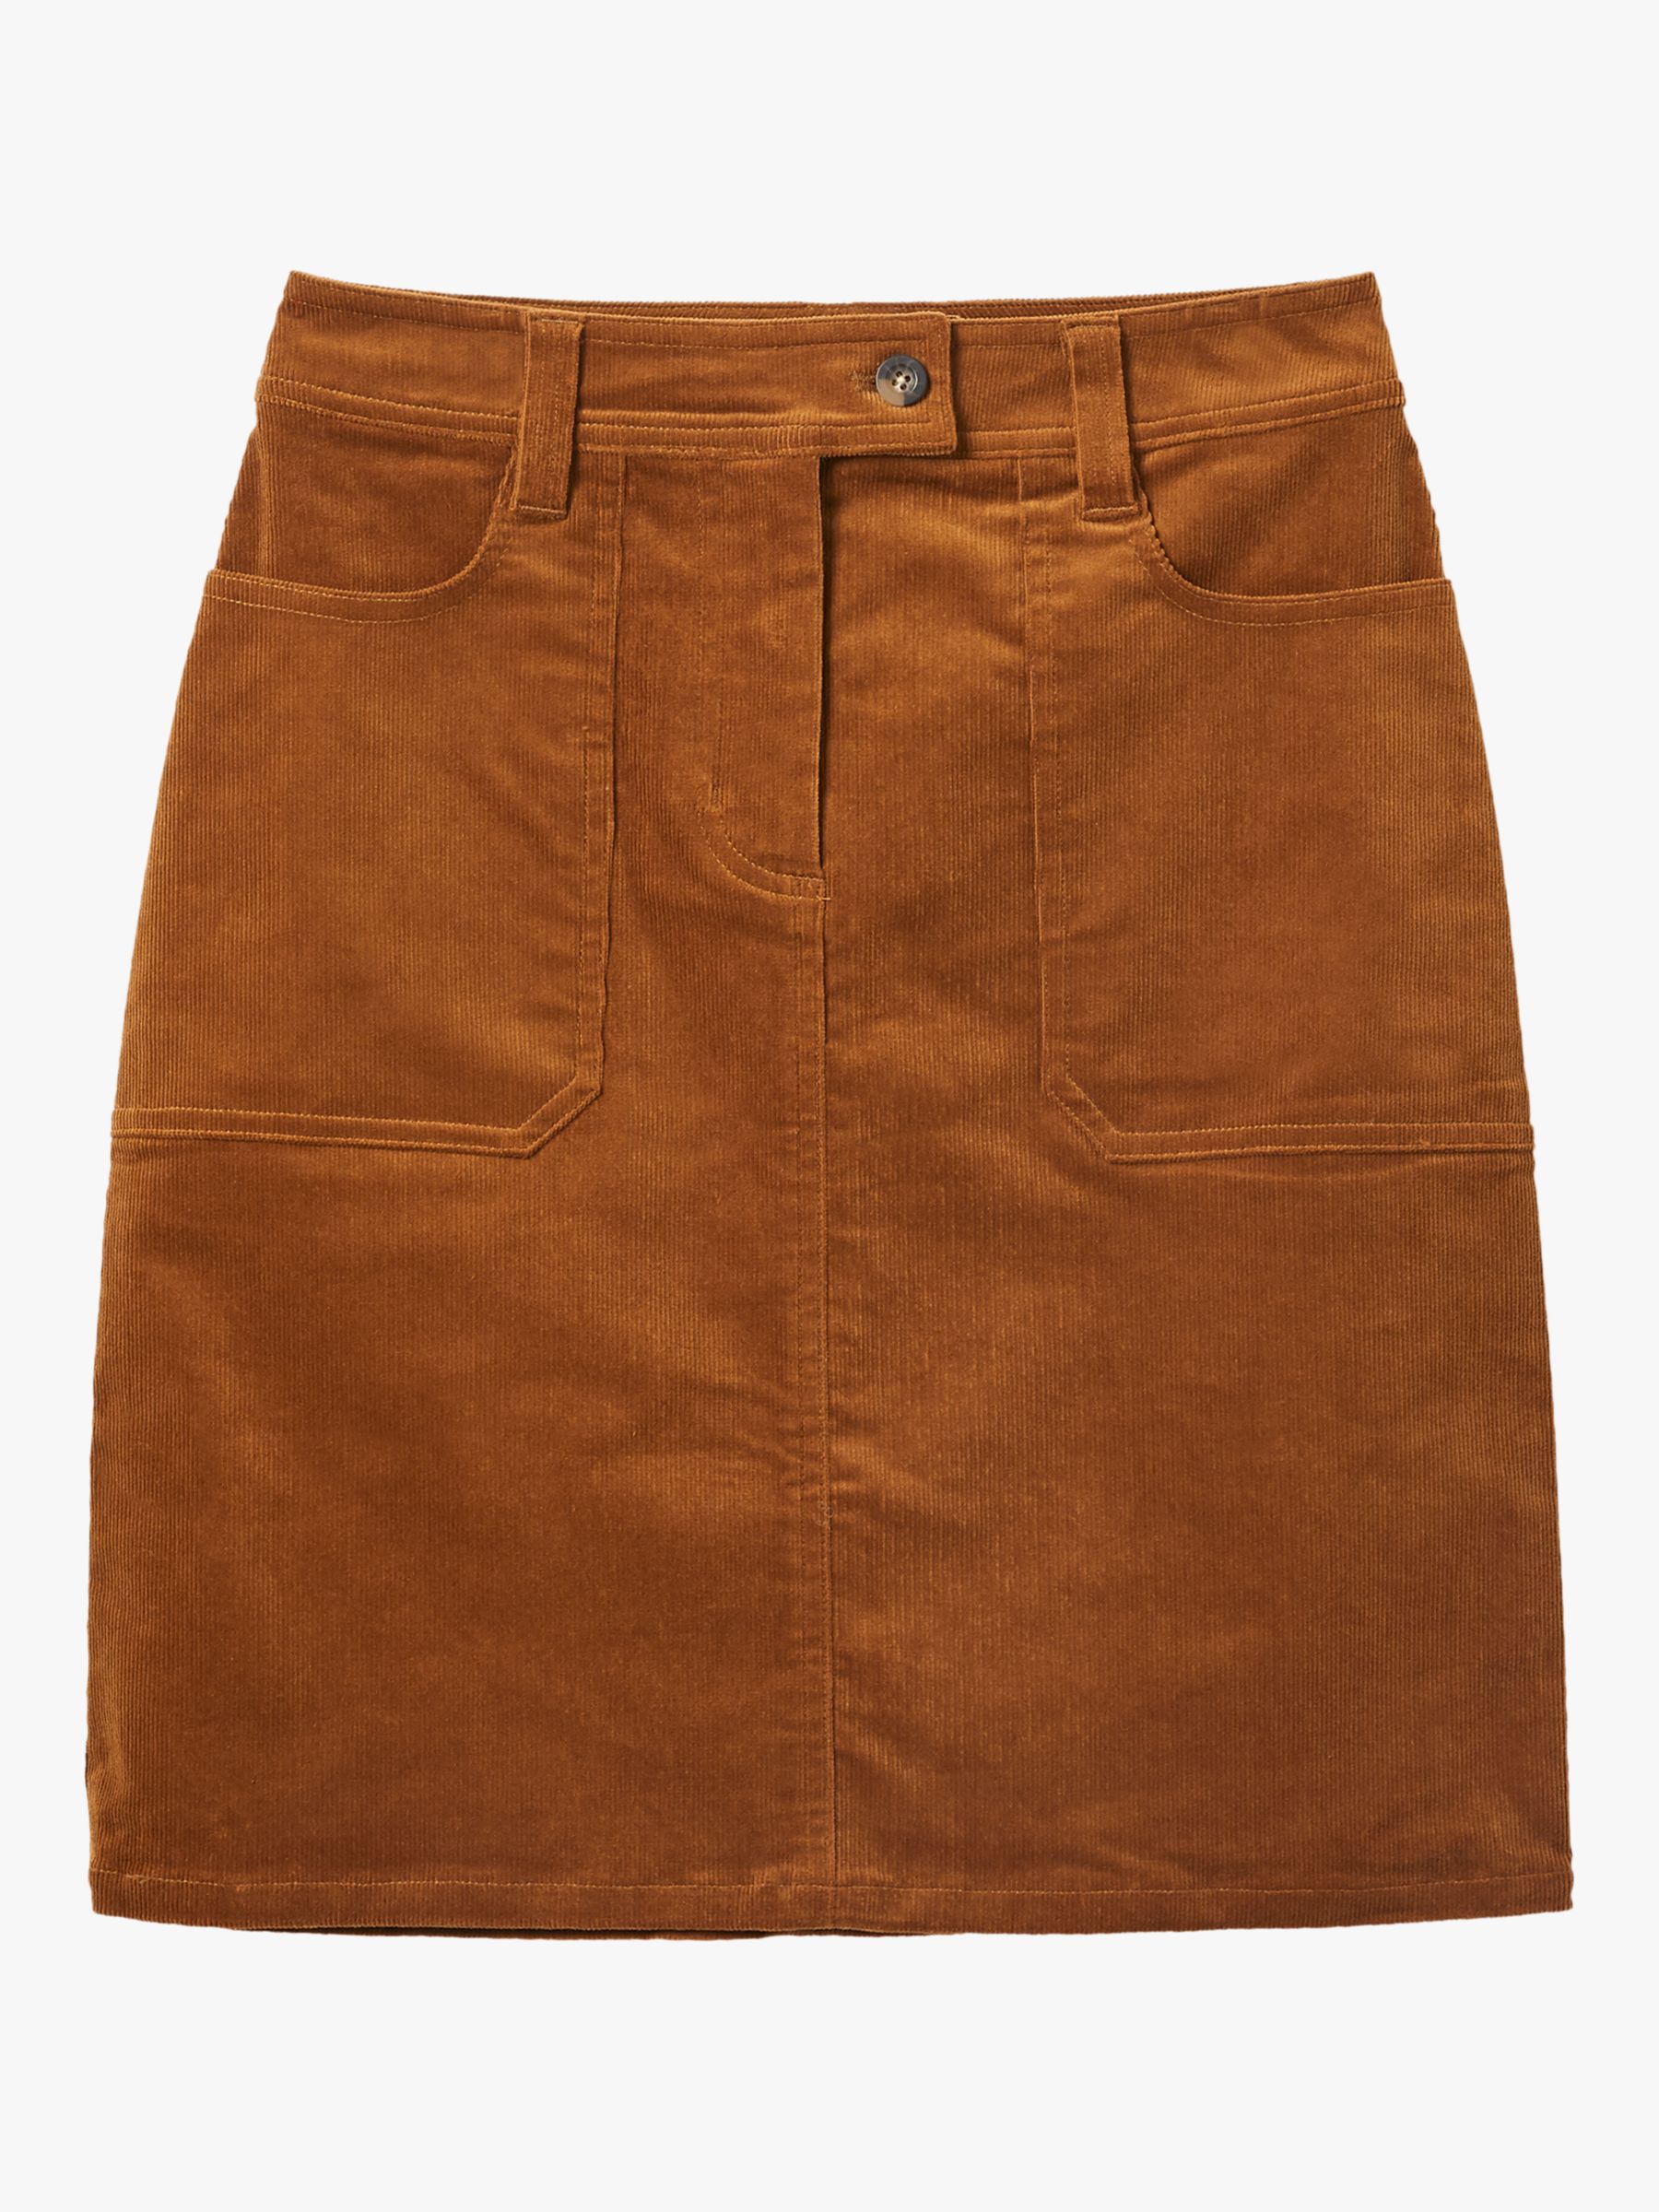 Boden Cavendish Corduroy Skirt